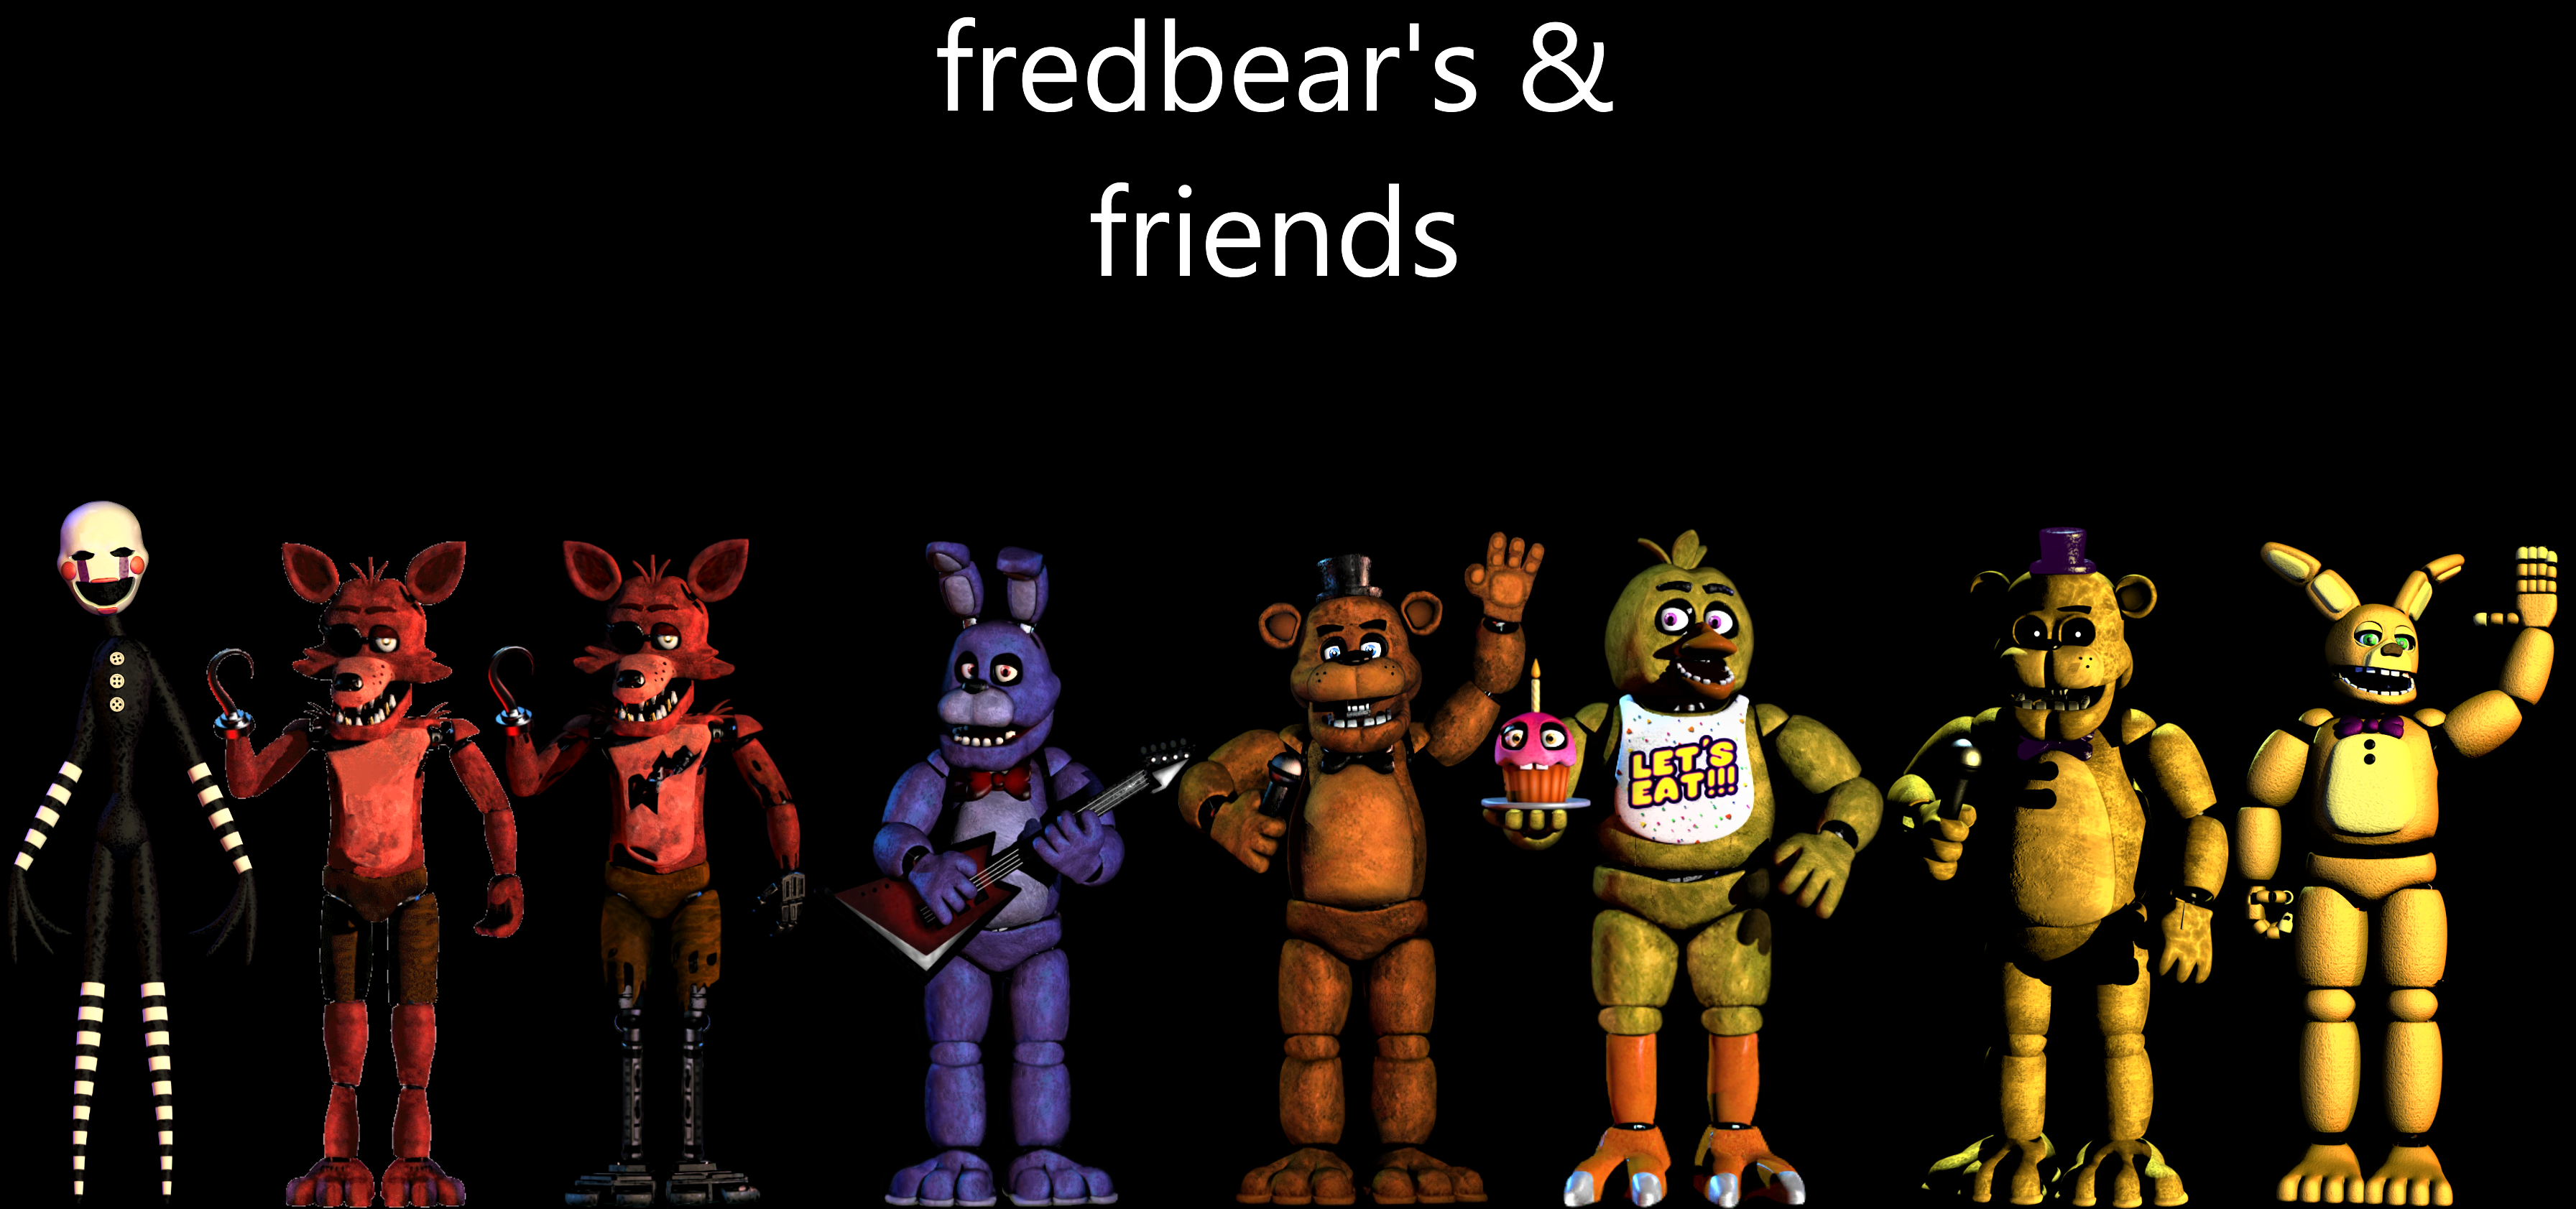 SFM FNAF Fredbear's And Friends Remastered V2 by mauricio2006 on